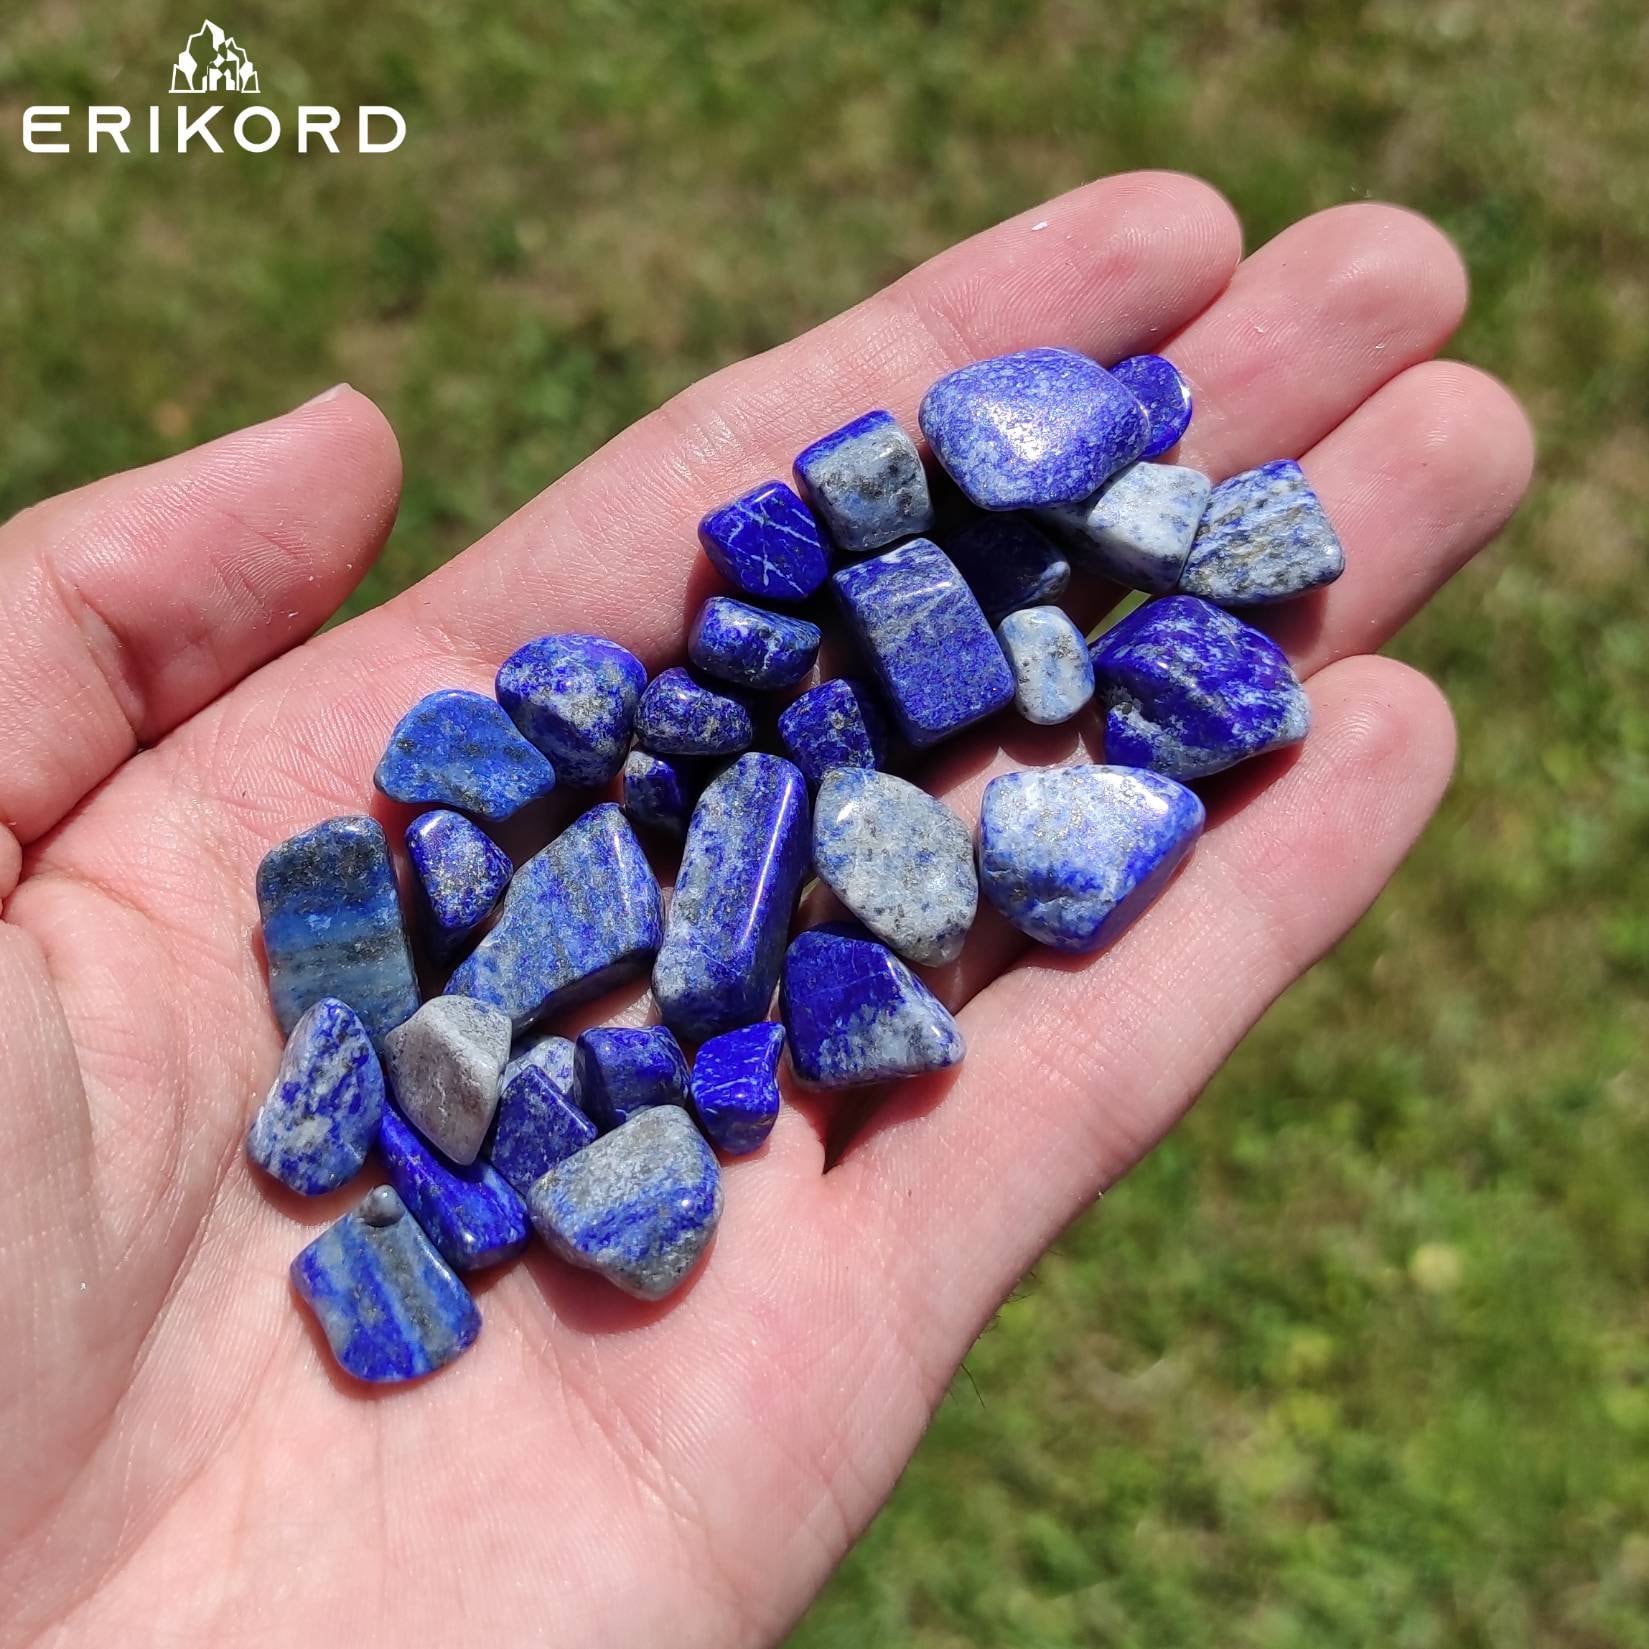 50/100/200g Lapis Lazuli 8-12mm Gravel Polished Blue Lapis Lazuli Tumbled Stones Natural Afghanistan Lapis Lazuli Loose Gemstone Crystal Lot